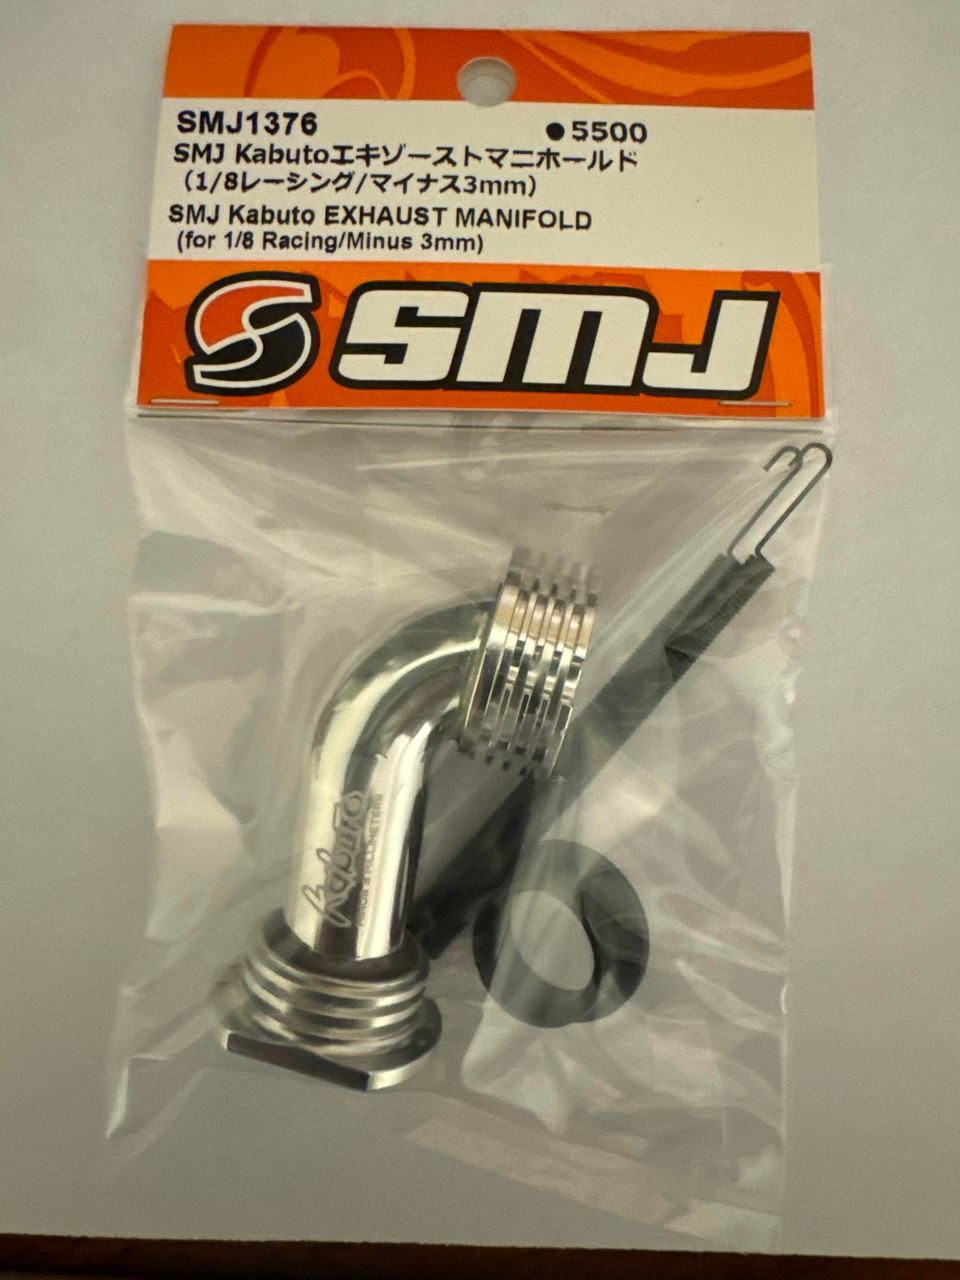 SMJ1376 - SMJ Kabuto Exhaust Manifold (1/8 Racing/-3mm)